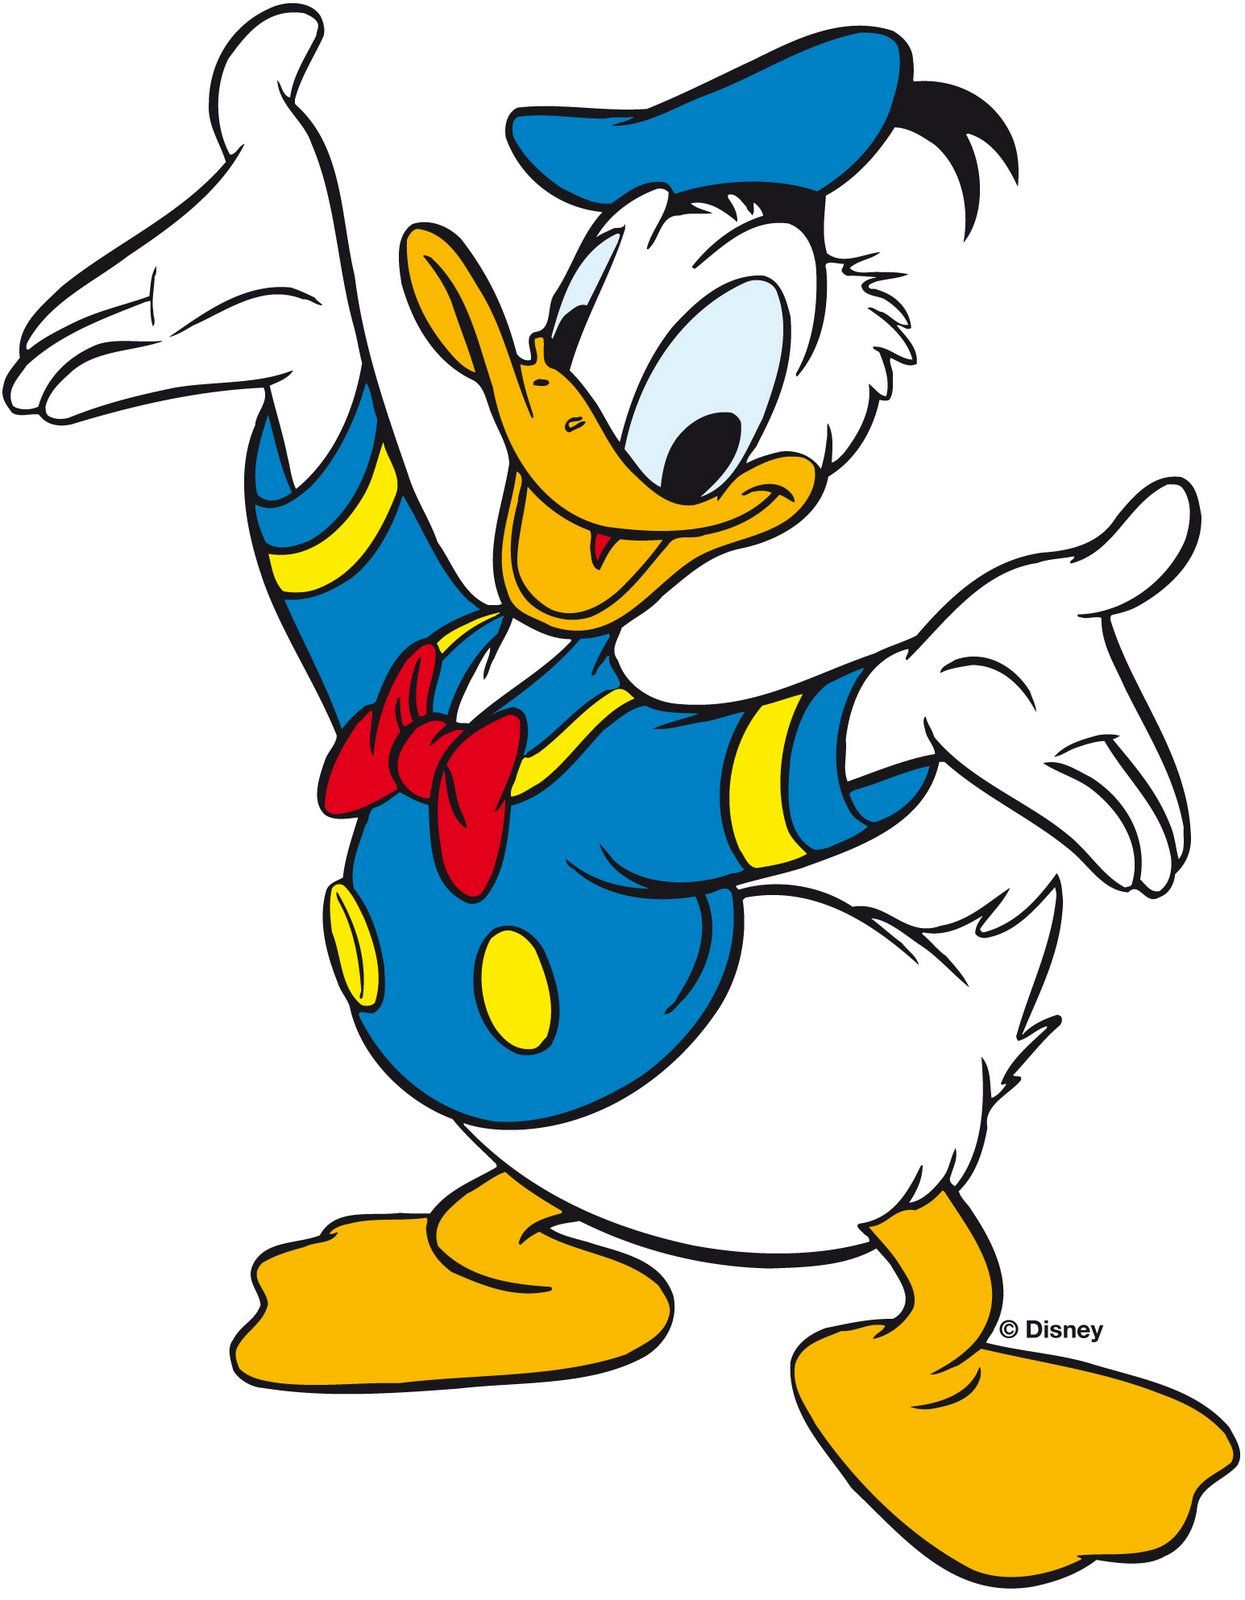 Donald Duck photo